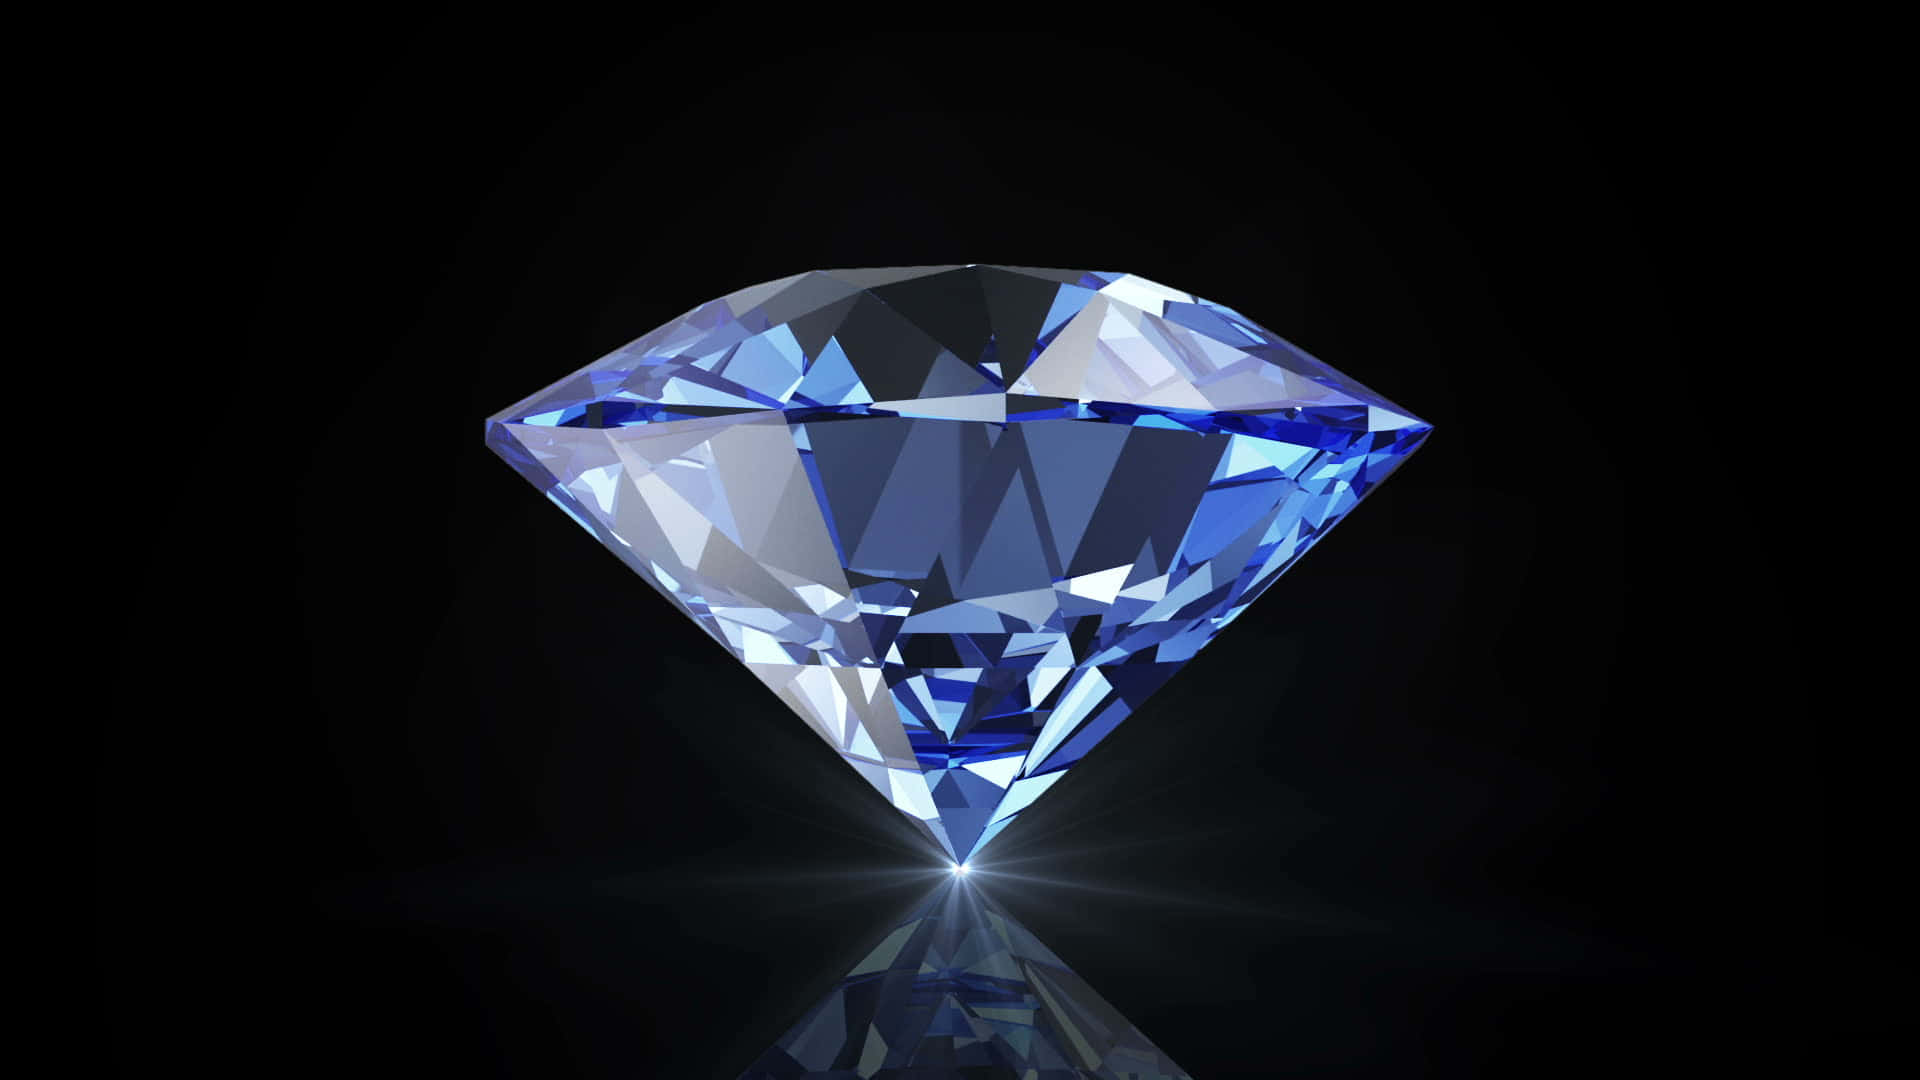 Premium Photo  Shiny gemstones diamonds crystals abstract background  beautiful luxury wallpaper 3d illustration